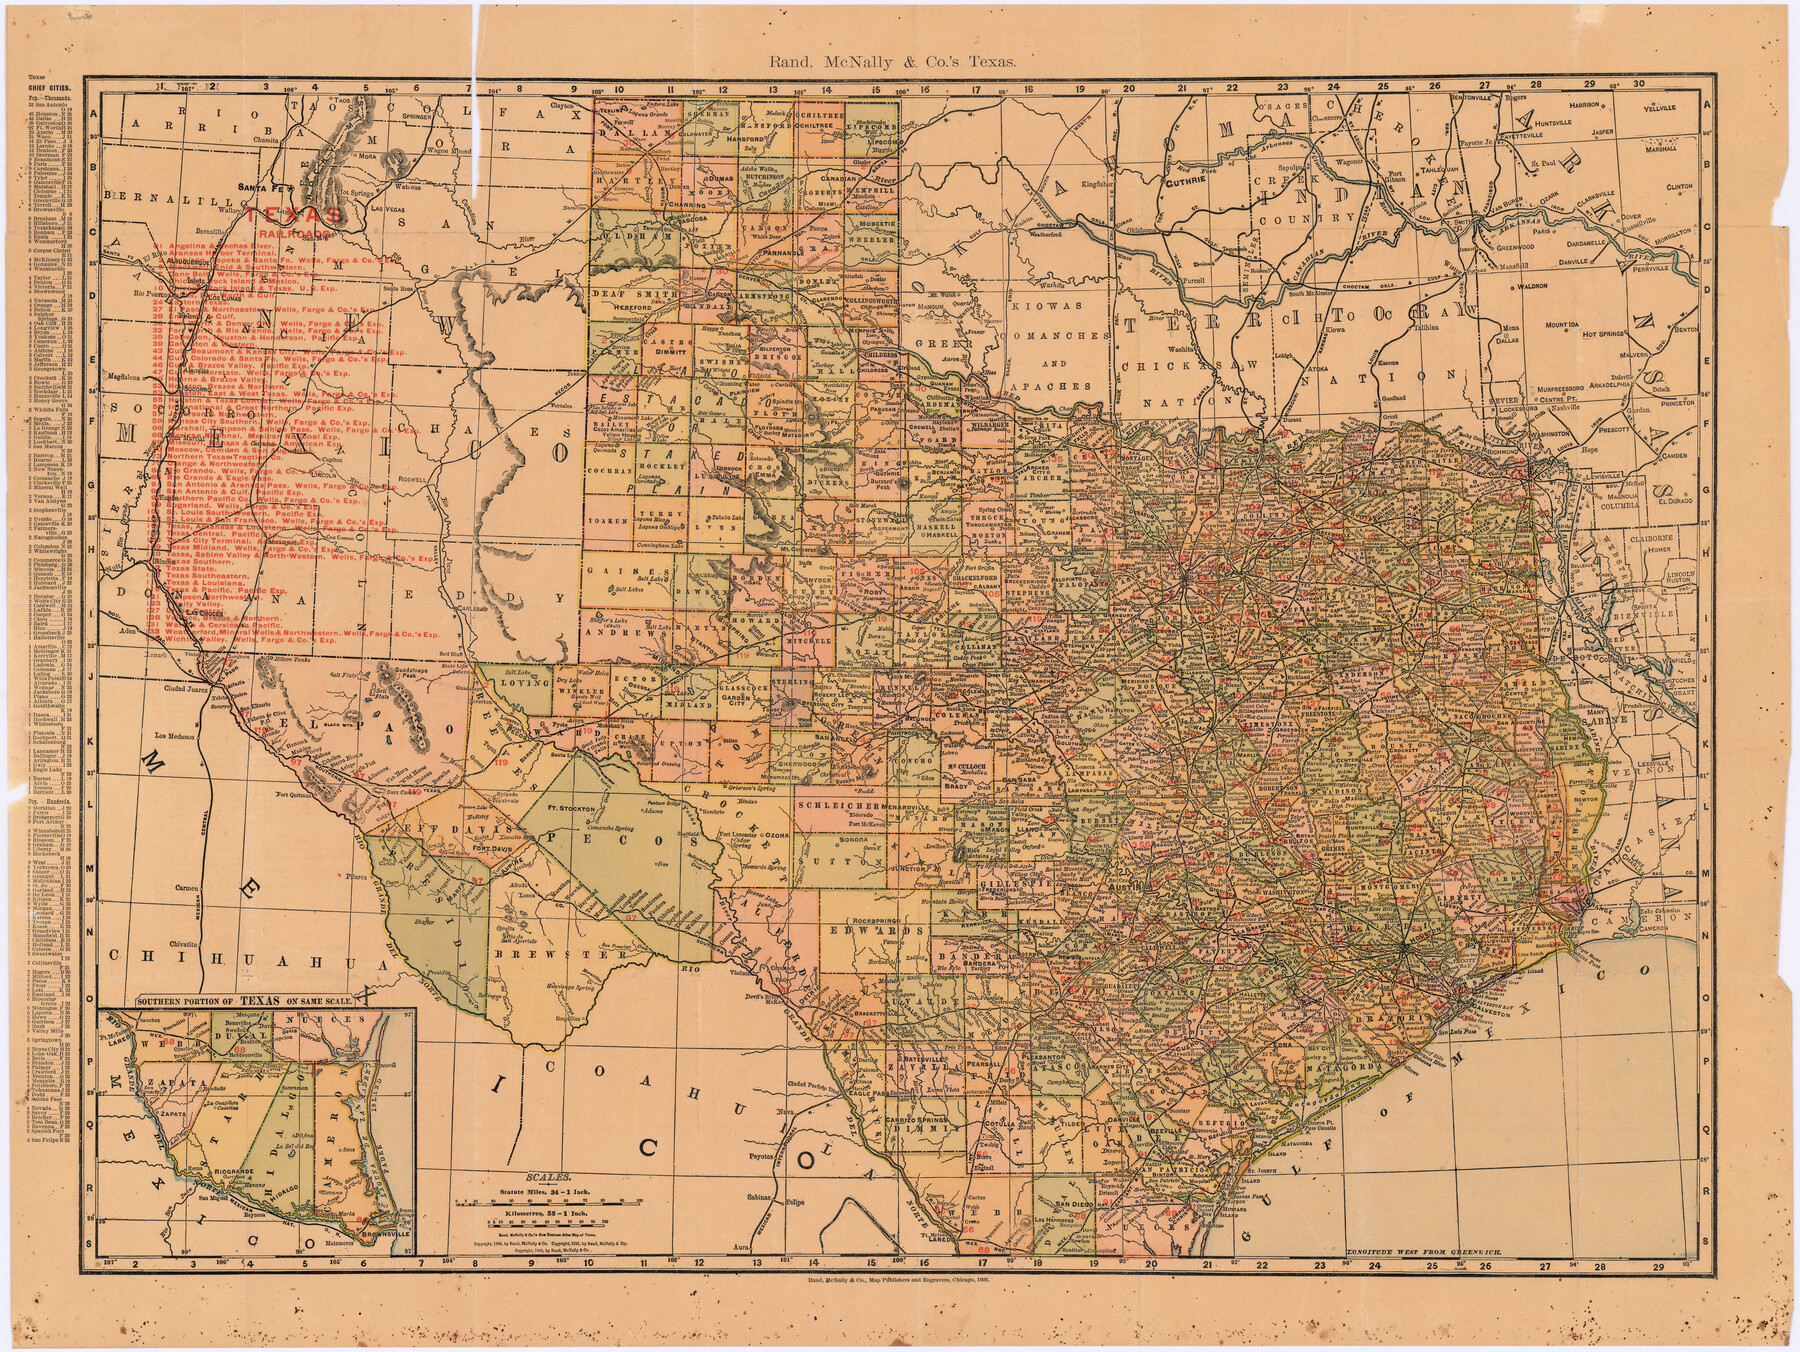 95886, Rand, McNally & Co.'s Texas, Cobb Digital Map Collection - 1